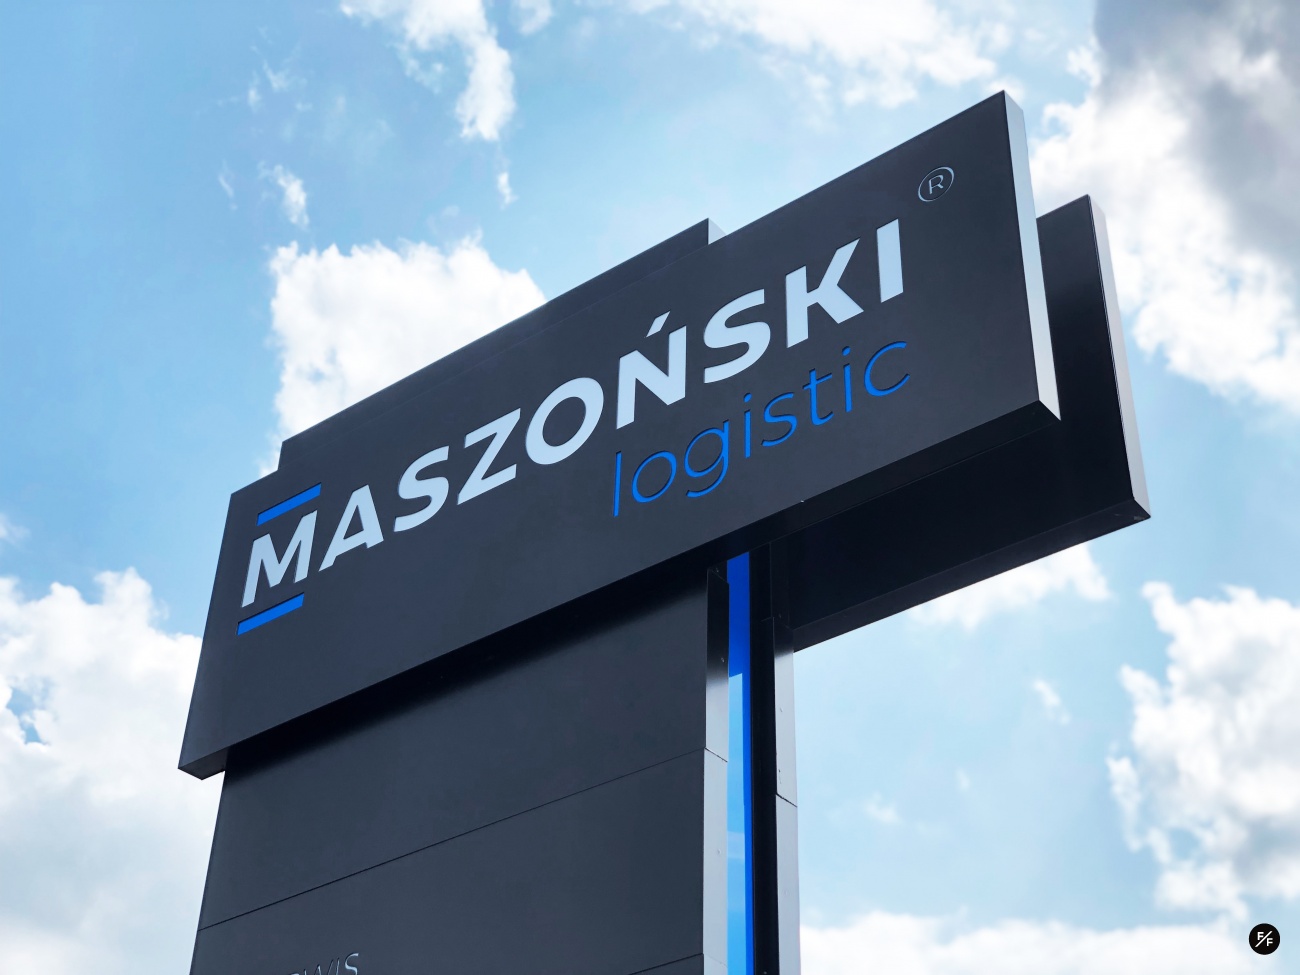 Maszoński Logistic